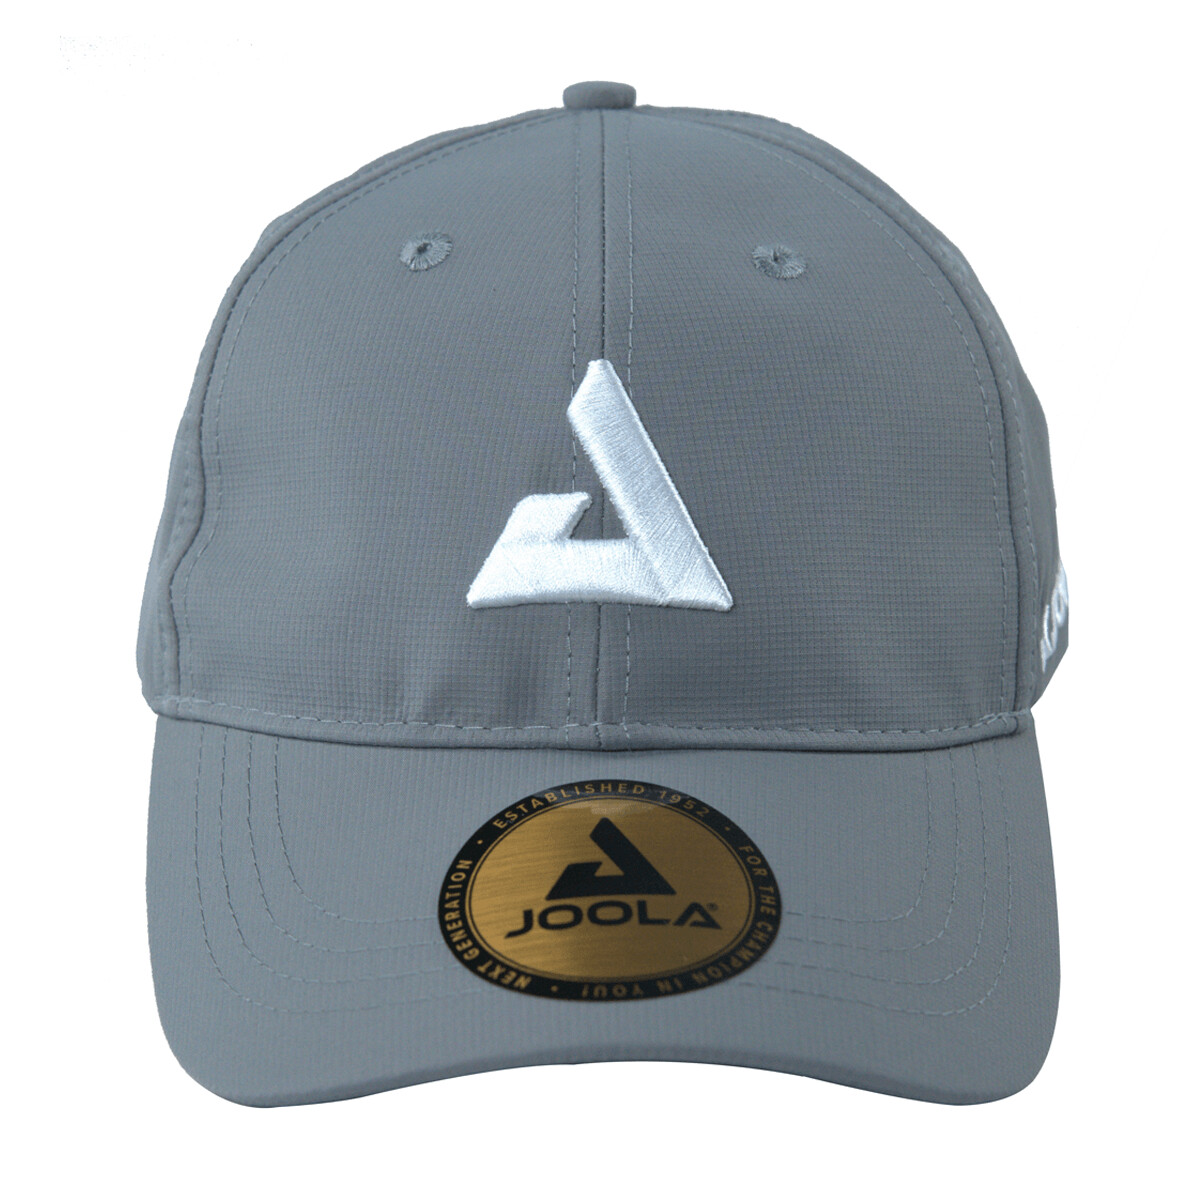 JOOLA Trinity Hat, Color: Grey/White